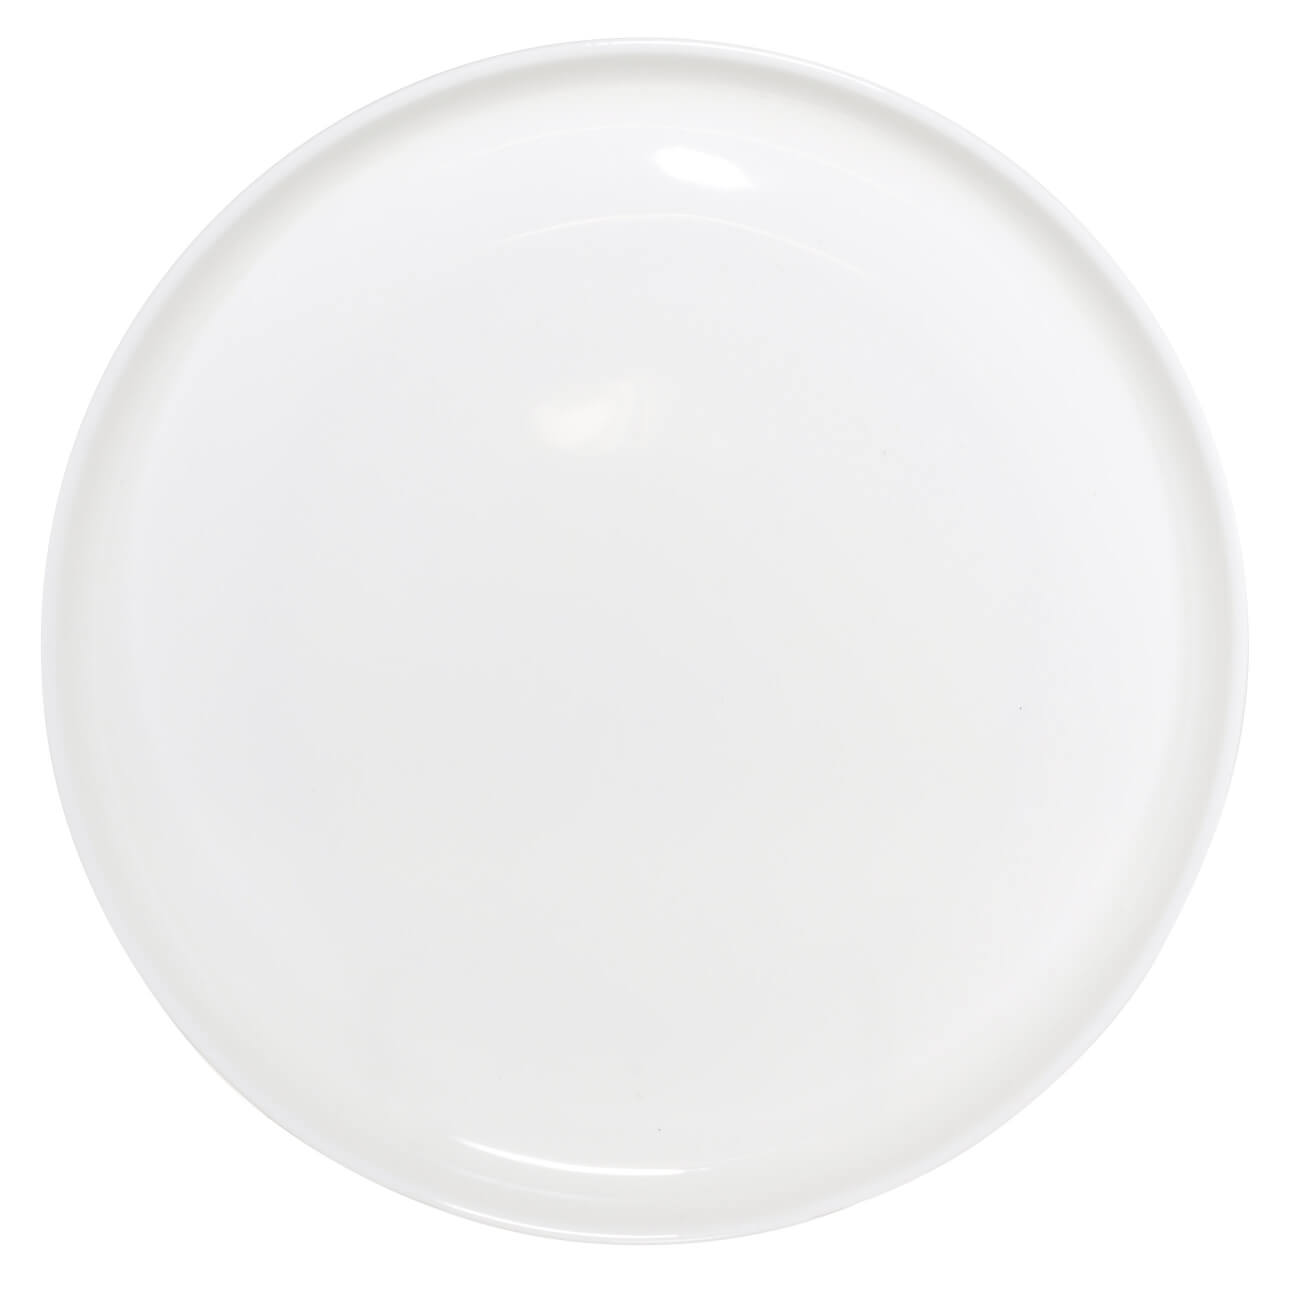 Kuchenland Тарелка обеденная, 26 см, фарфор F, белая, Ideal white